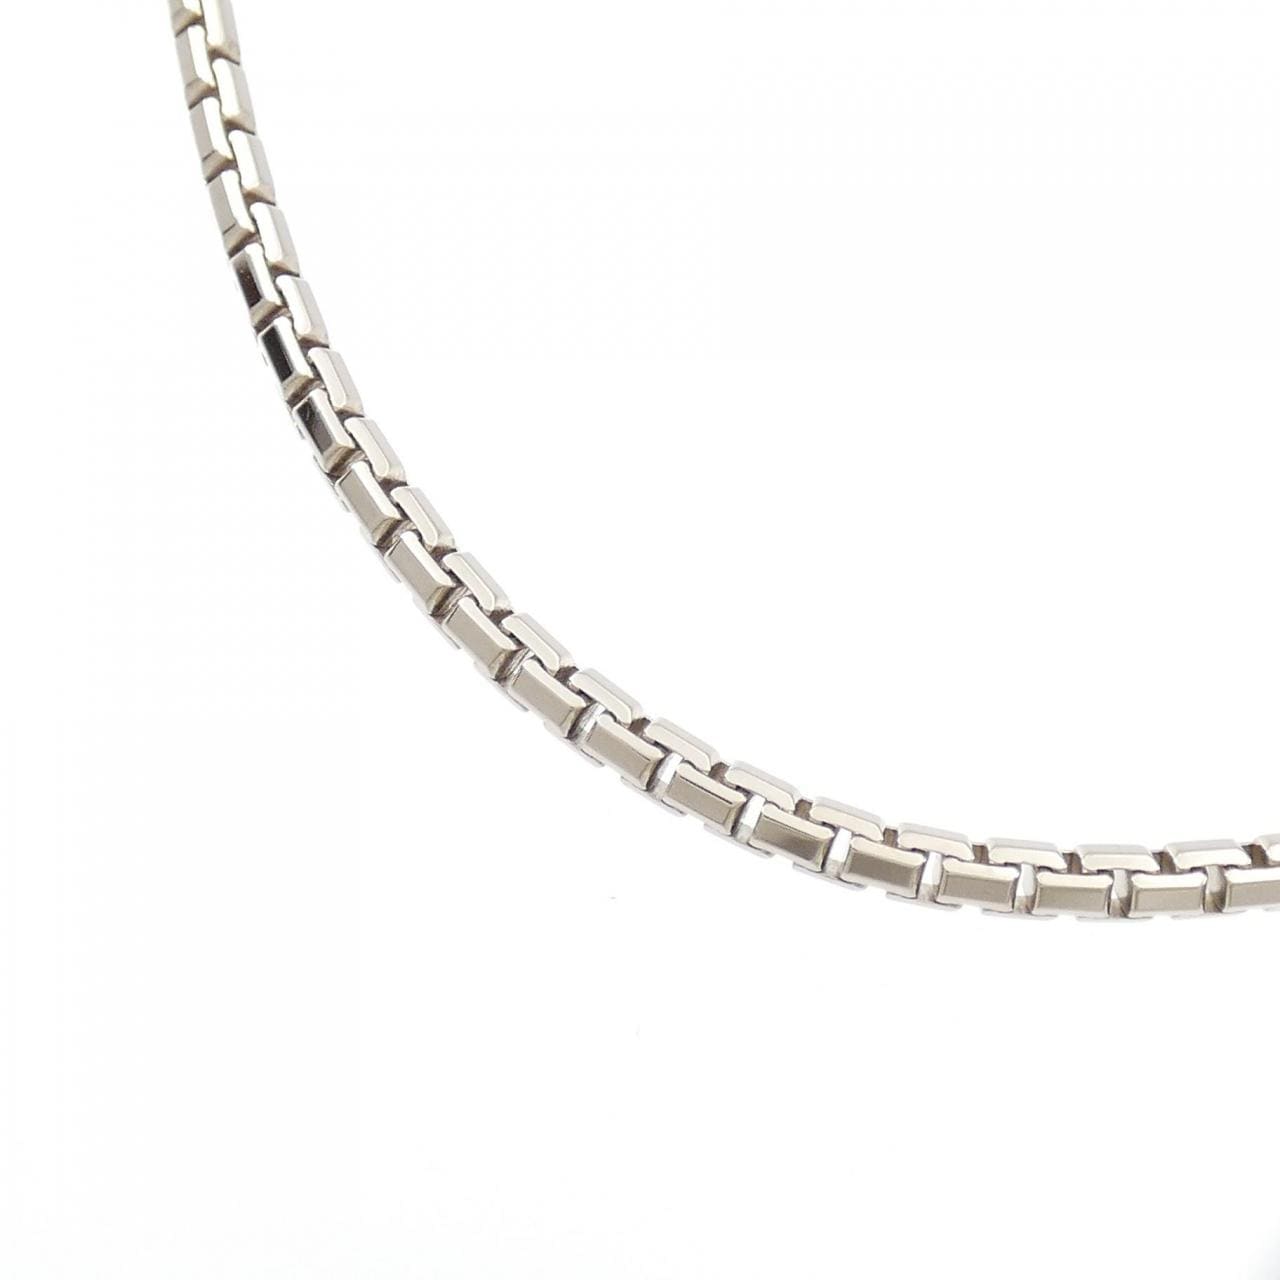 Cartier venetian necklace